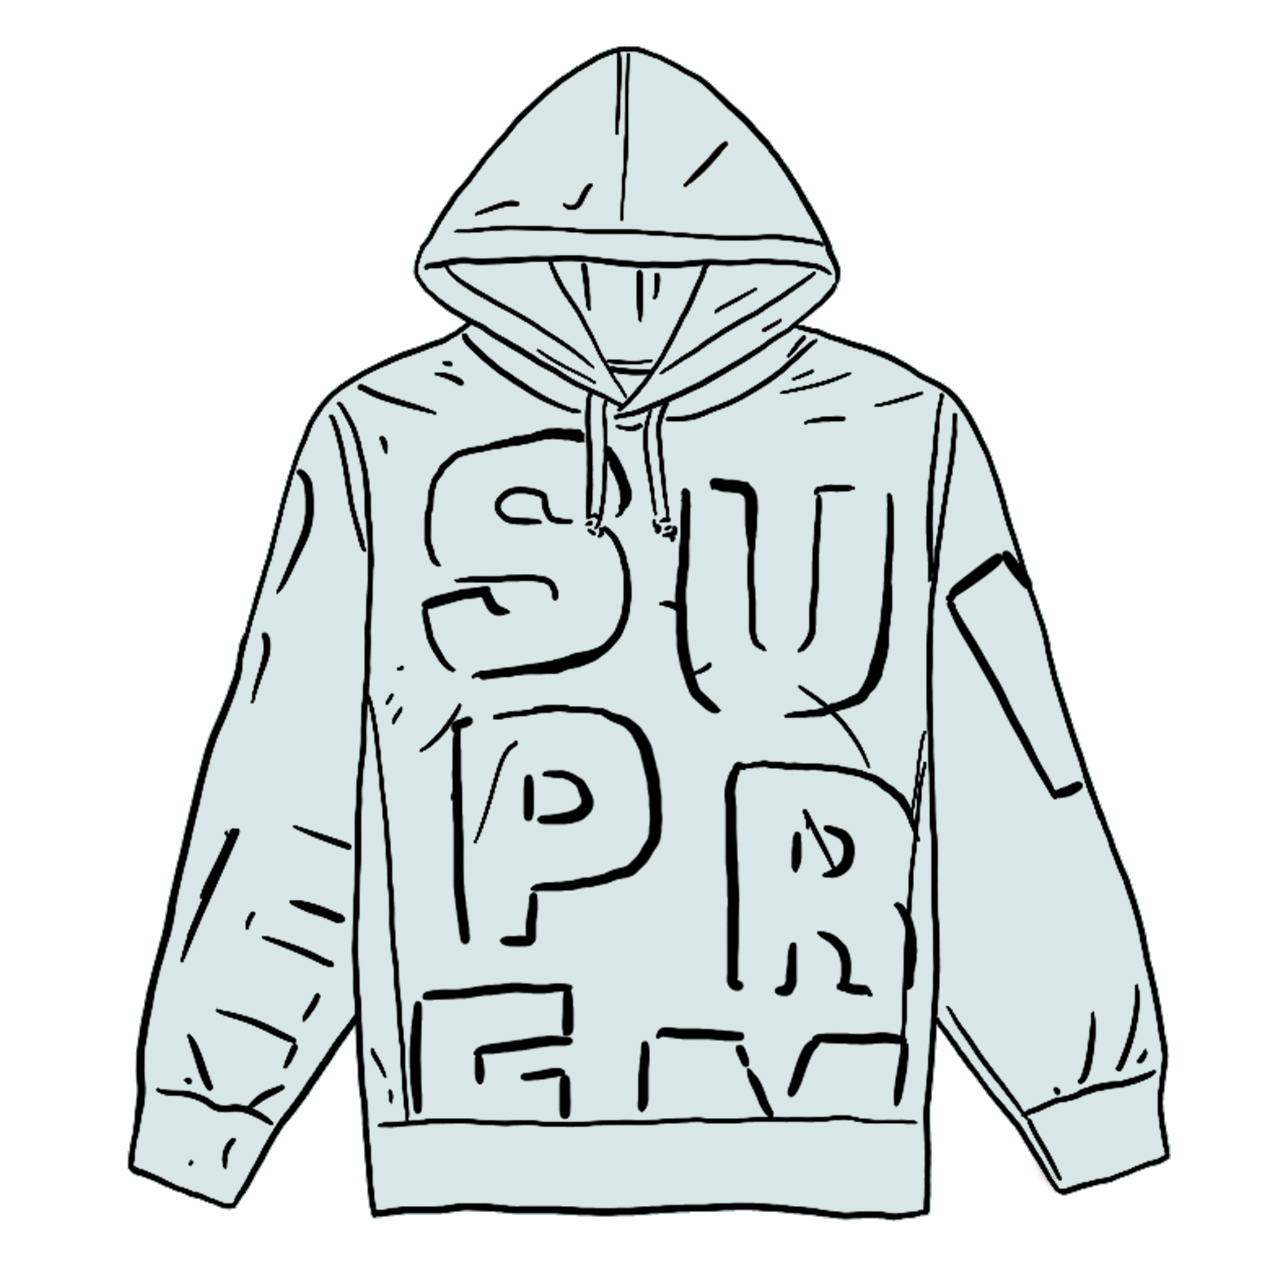 Supreme Cutout Letters Hooded Sweatshirt